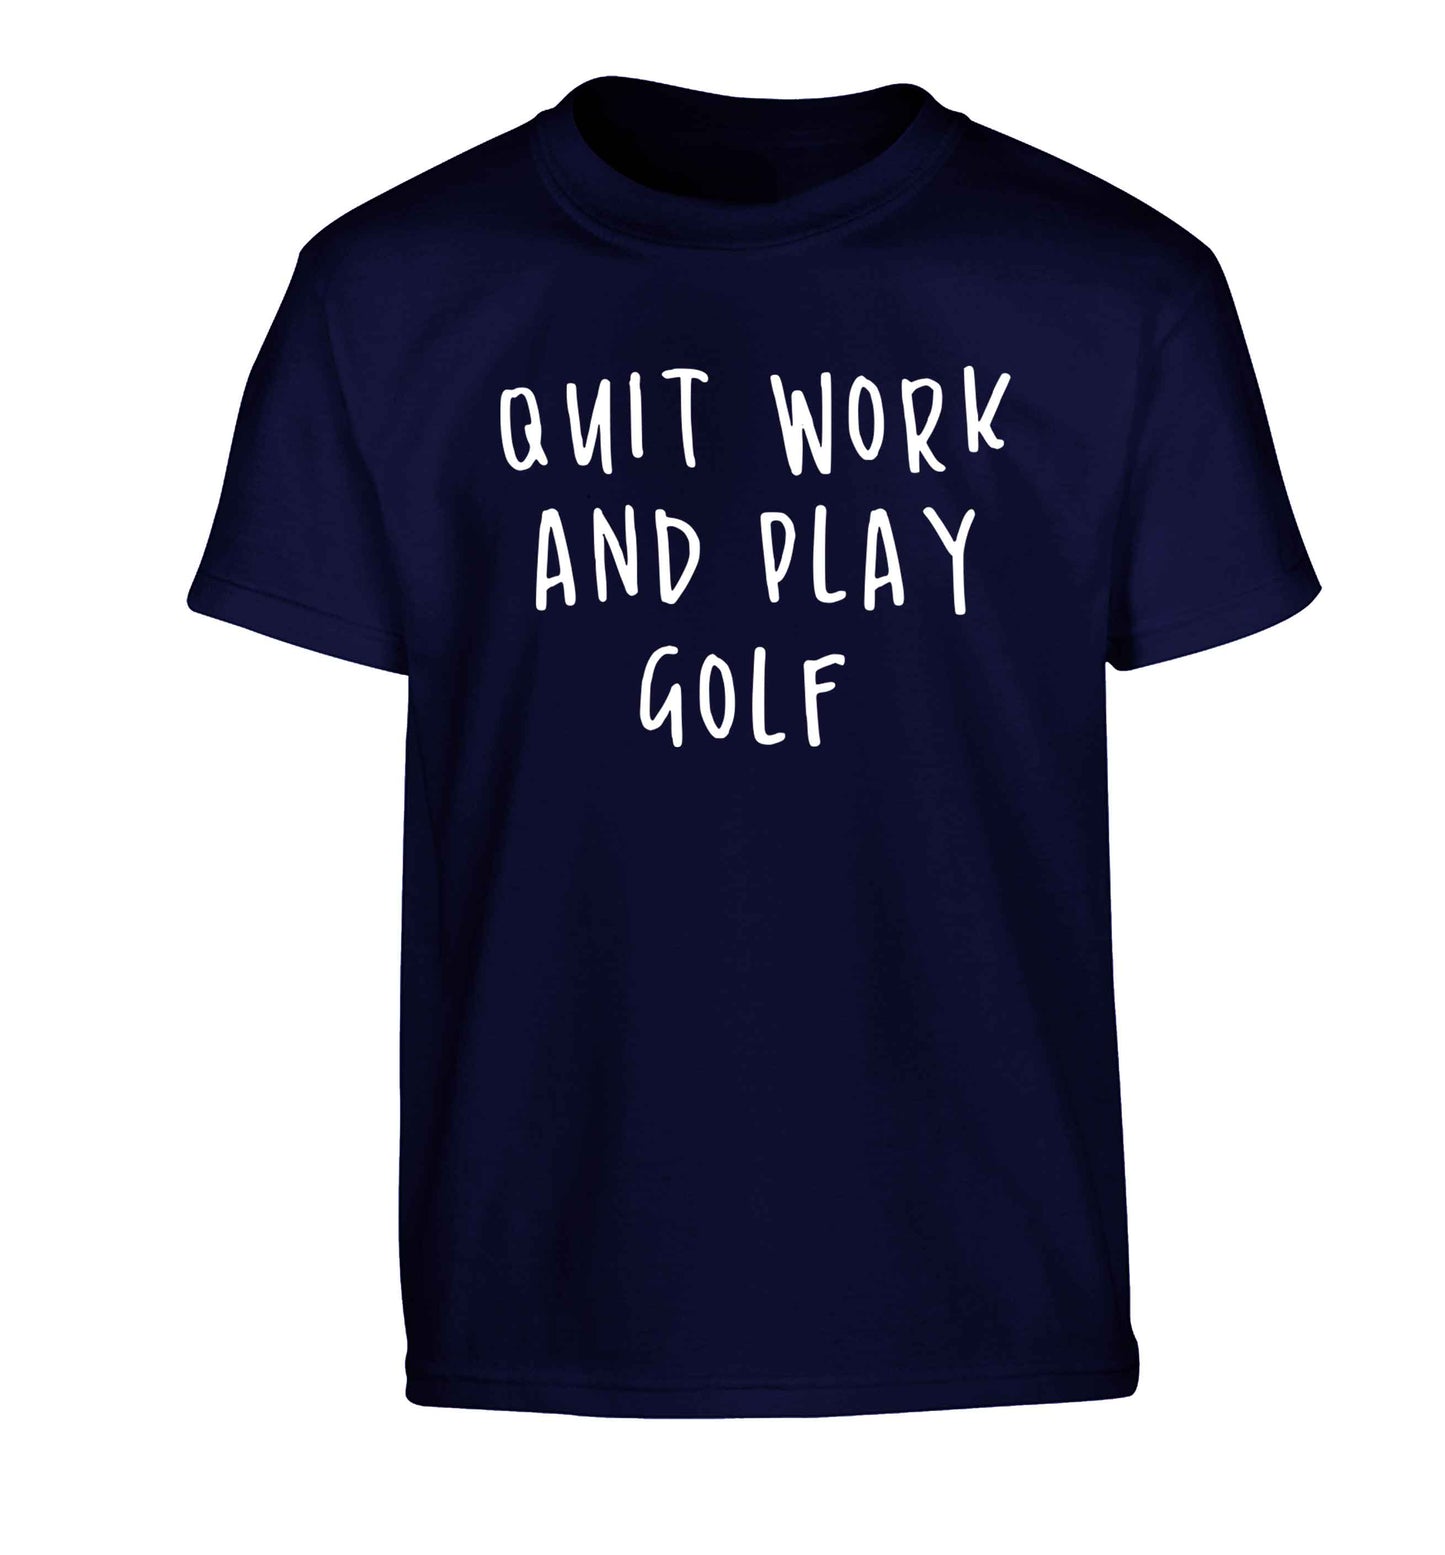 Quit work and play golf Children's navy Tshirt 12-13 Years